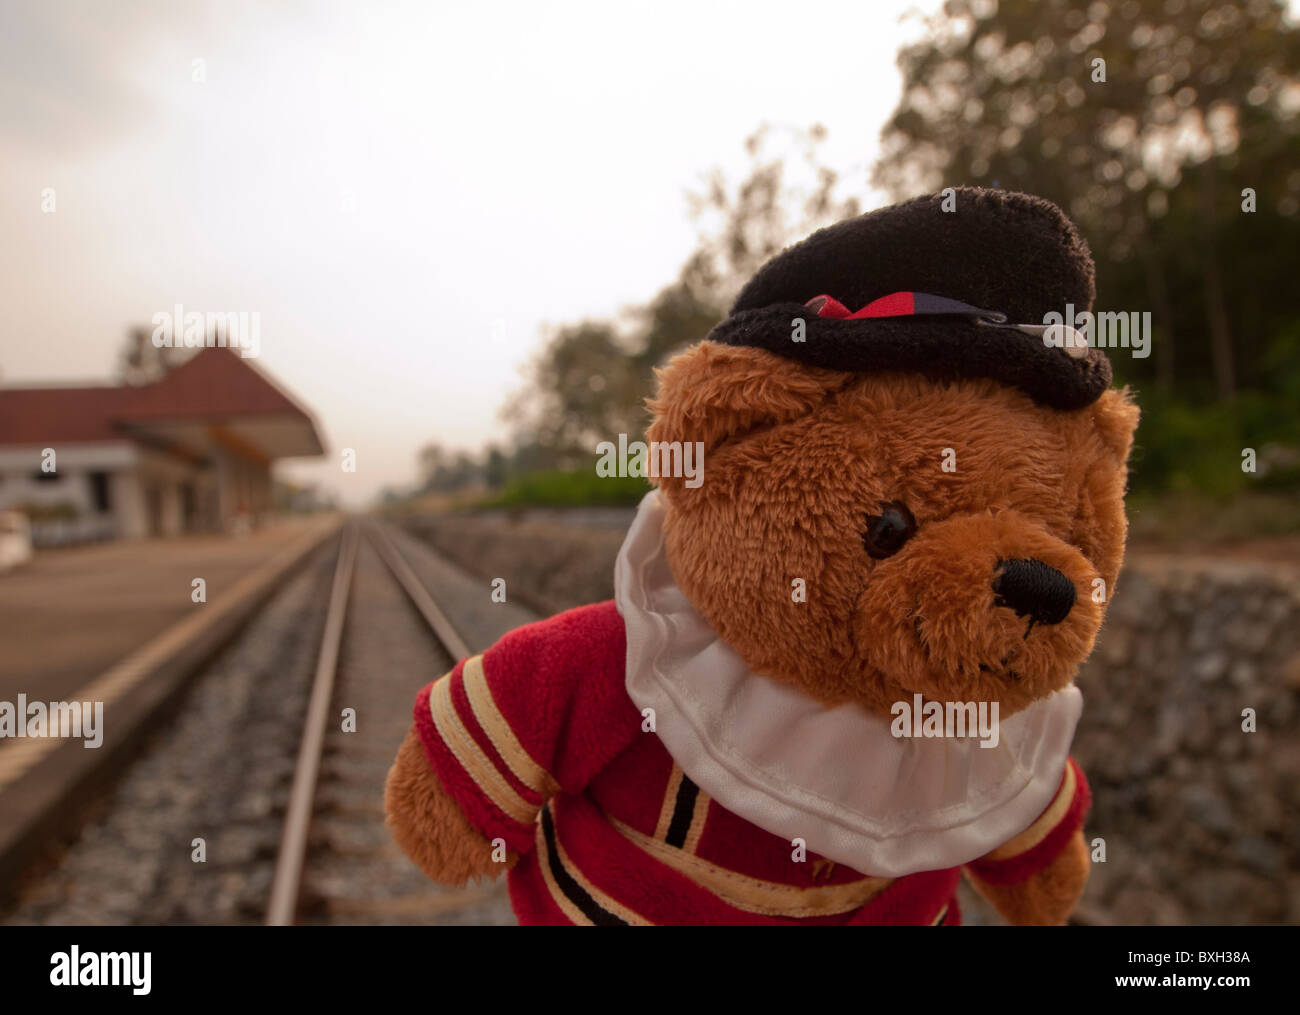 Harrods Teddy Bear with railway track Stock Photo